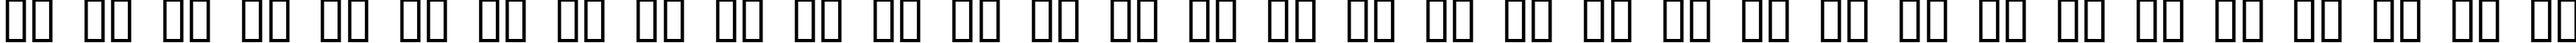 Пример написания русского алфавита шрифтом Parsons Heavy